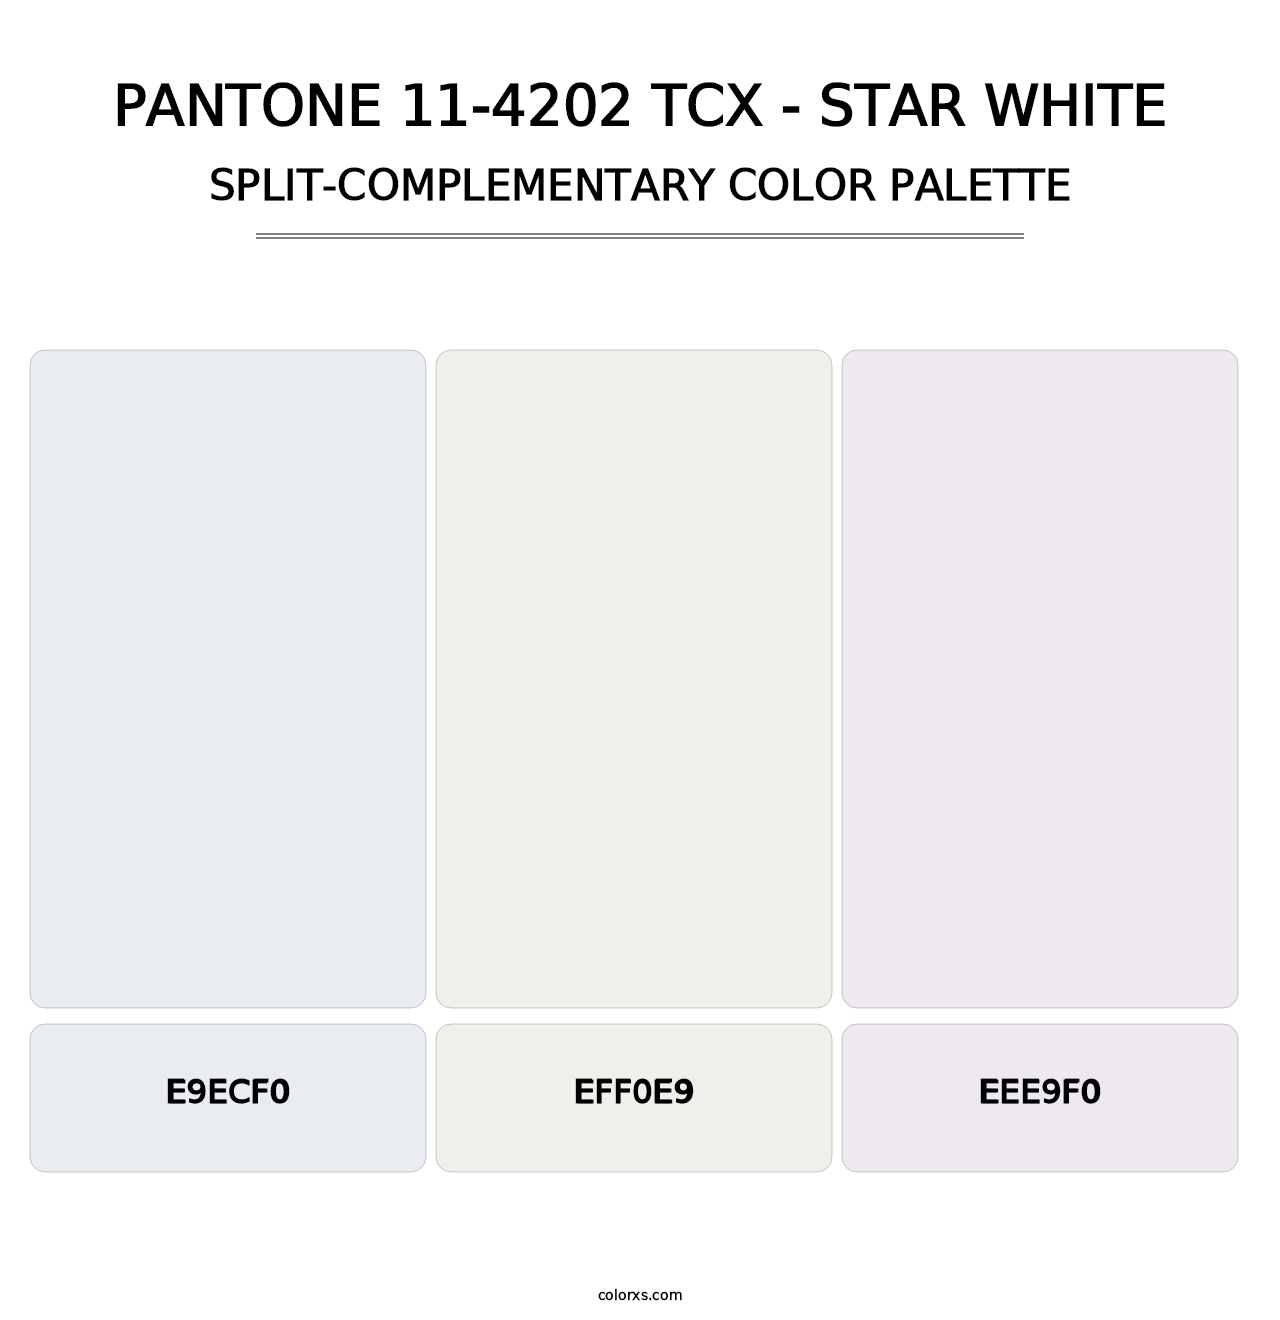 PANTONE 11-4202 TCX - Star White - Split-Complementary Color Palette